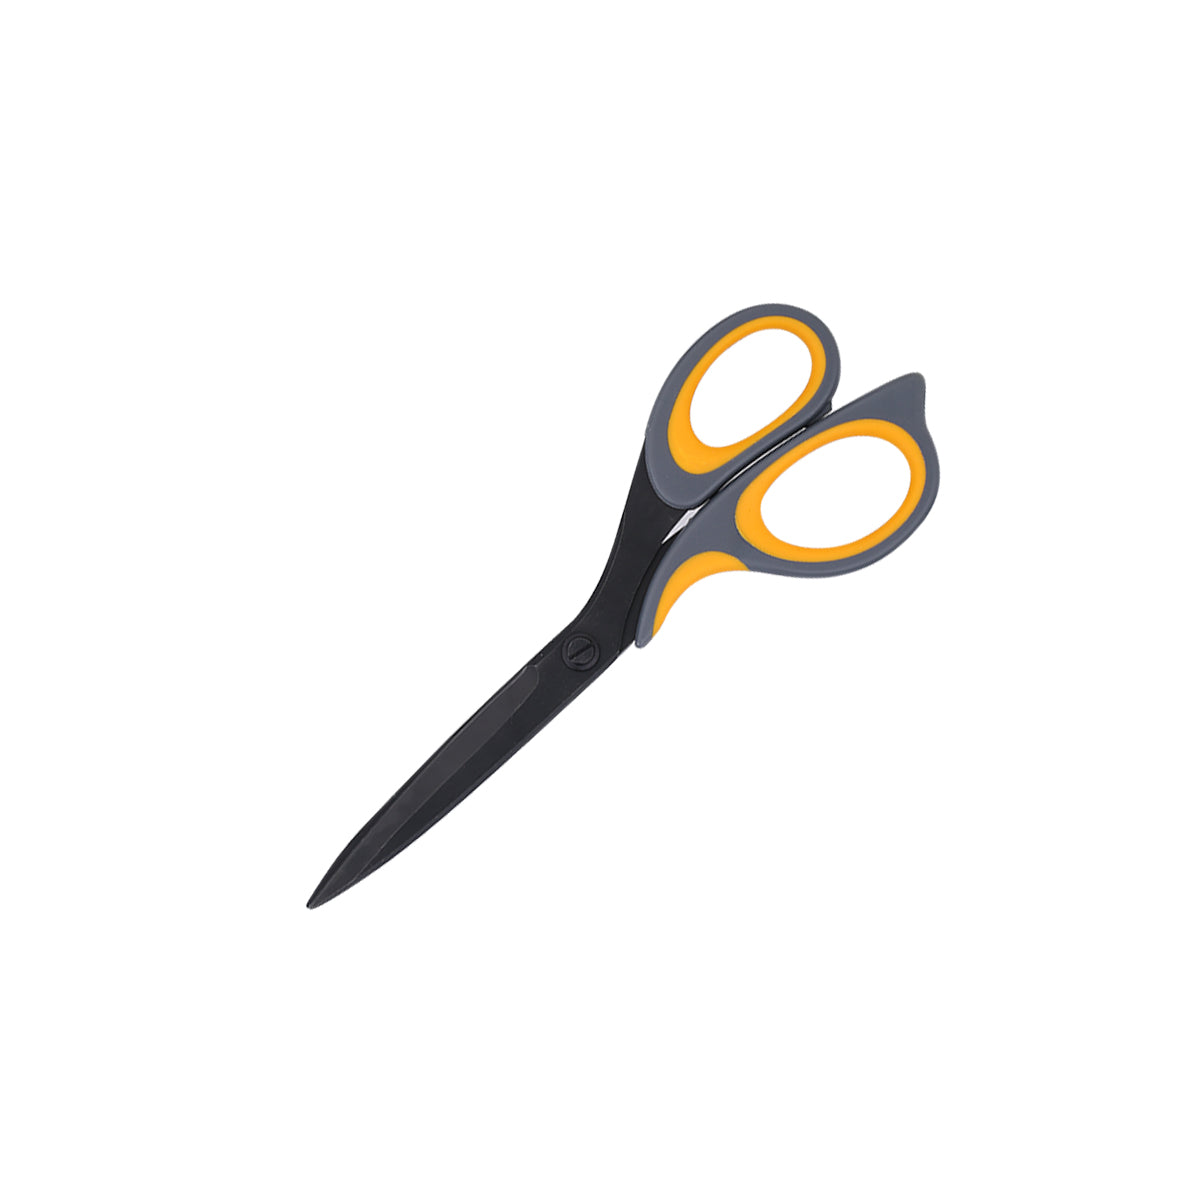 Deli Soft-Touch Home Office Craft Cutting Scissors E77757